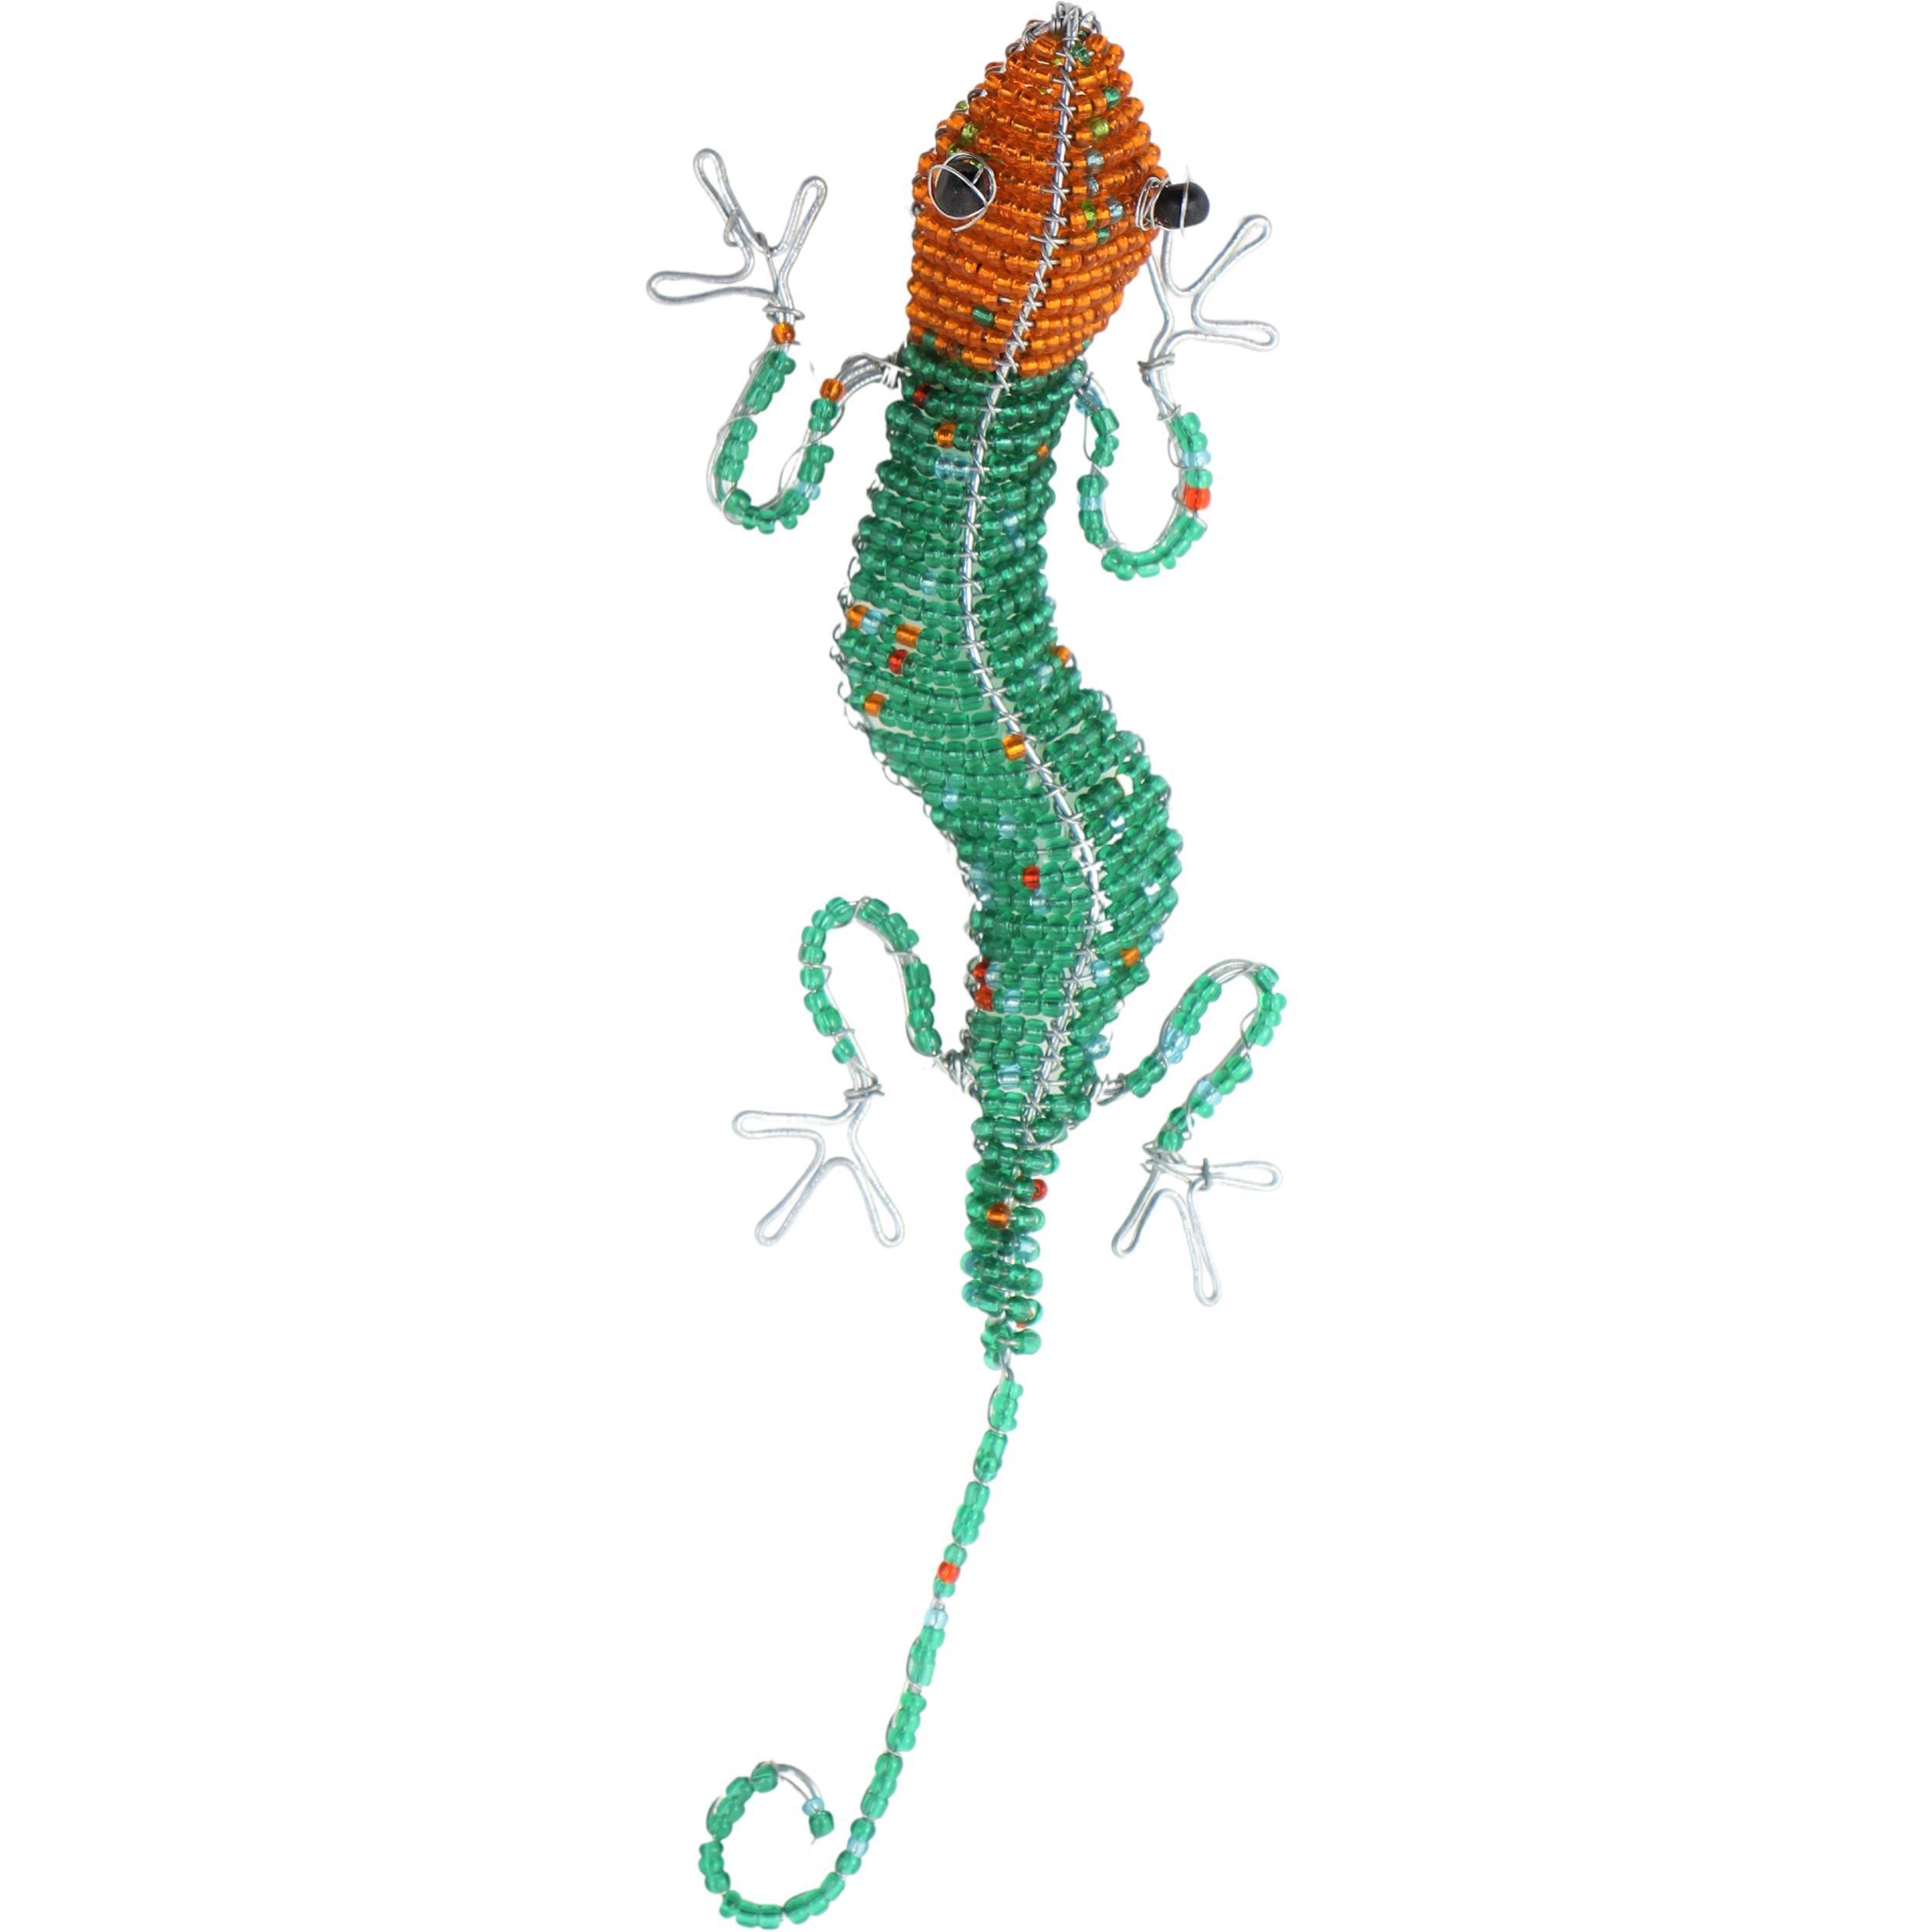 Shona Tribe Wire and Beaded Animals - Lizard ~1.2" Tall - Wire and Beaded Animals